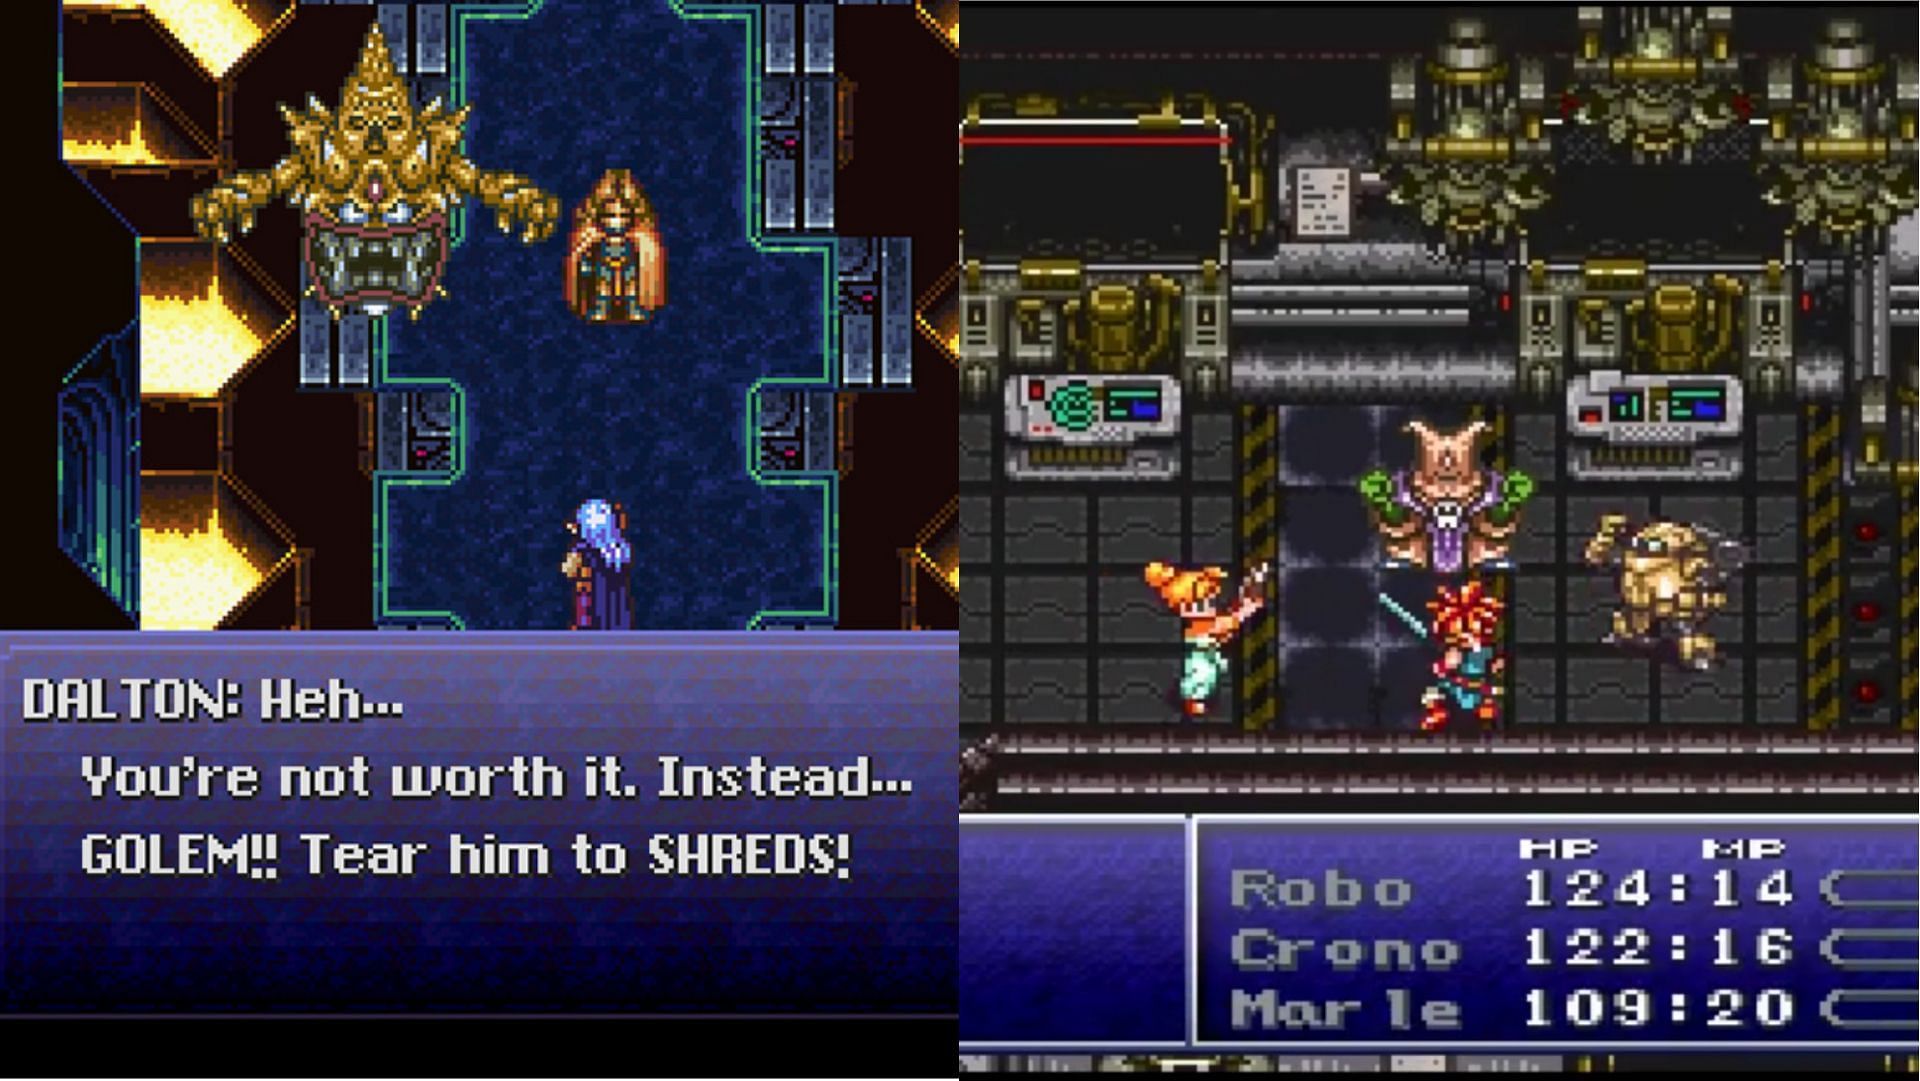 Chrono Trigger: Flames Of Eternity [SNES] (amazing hack)! 